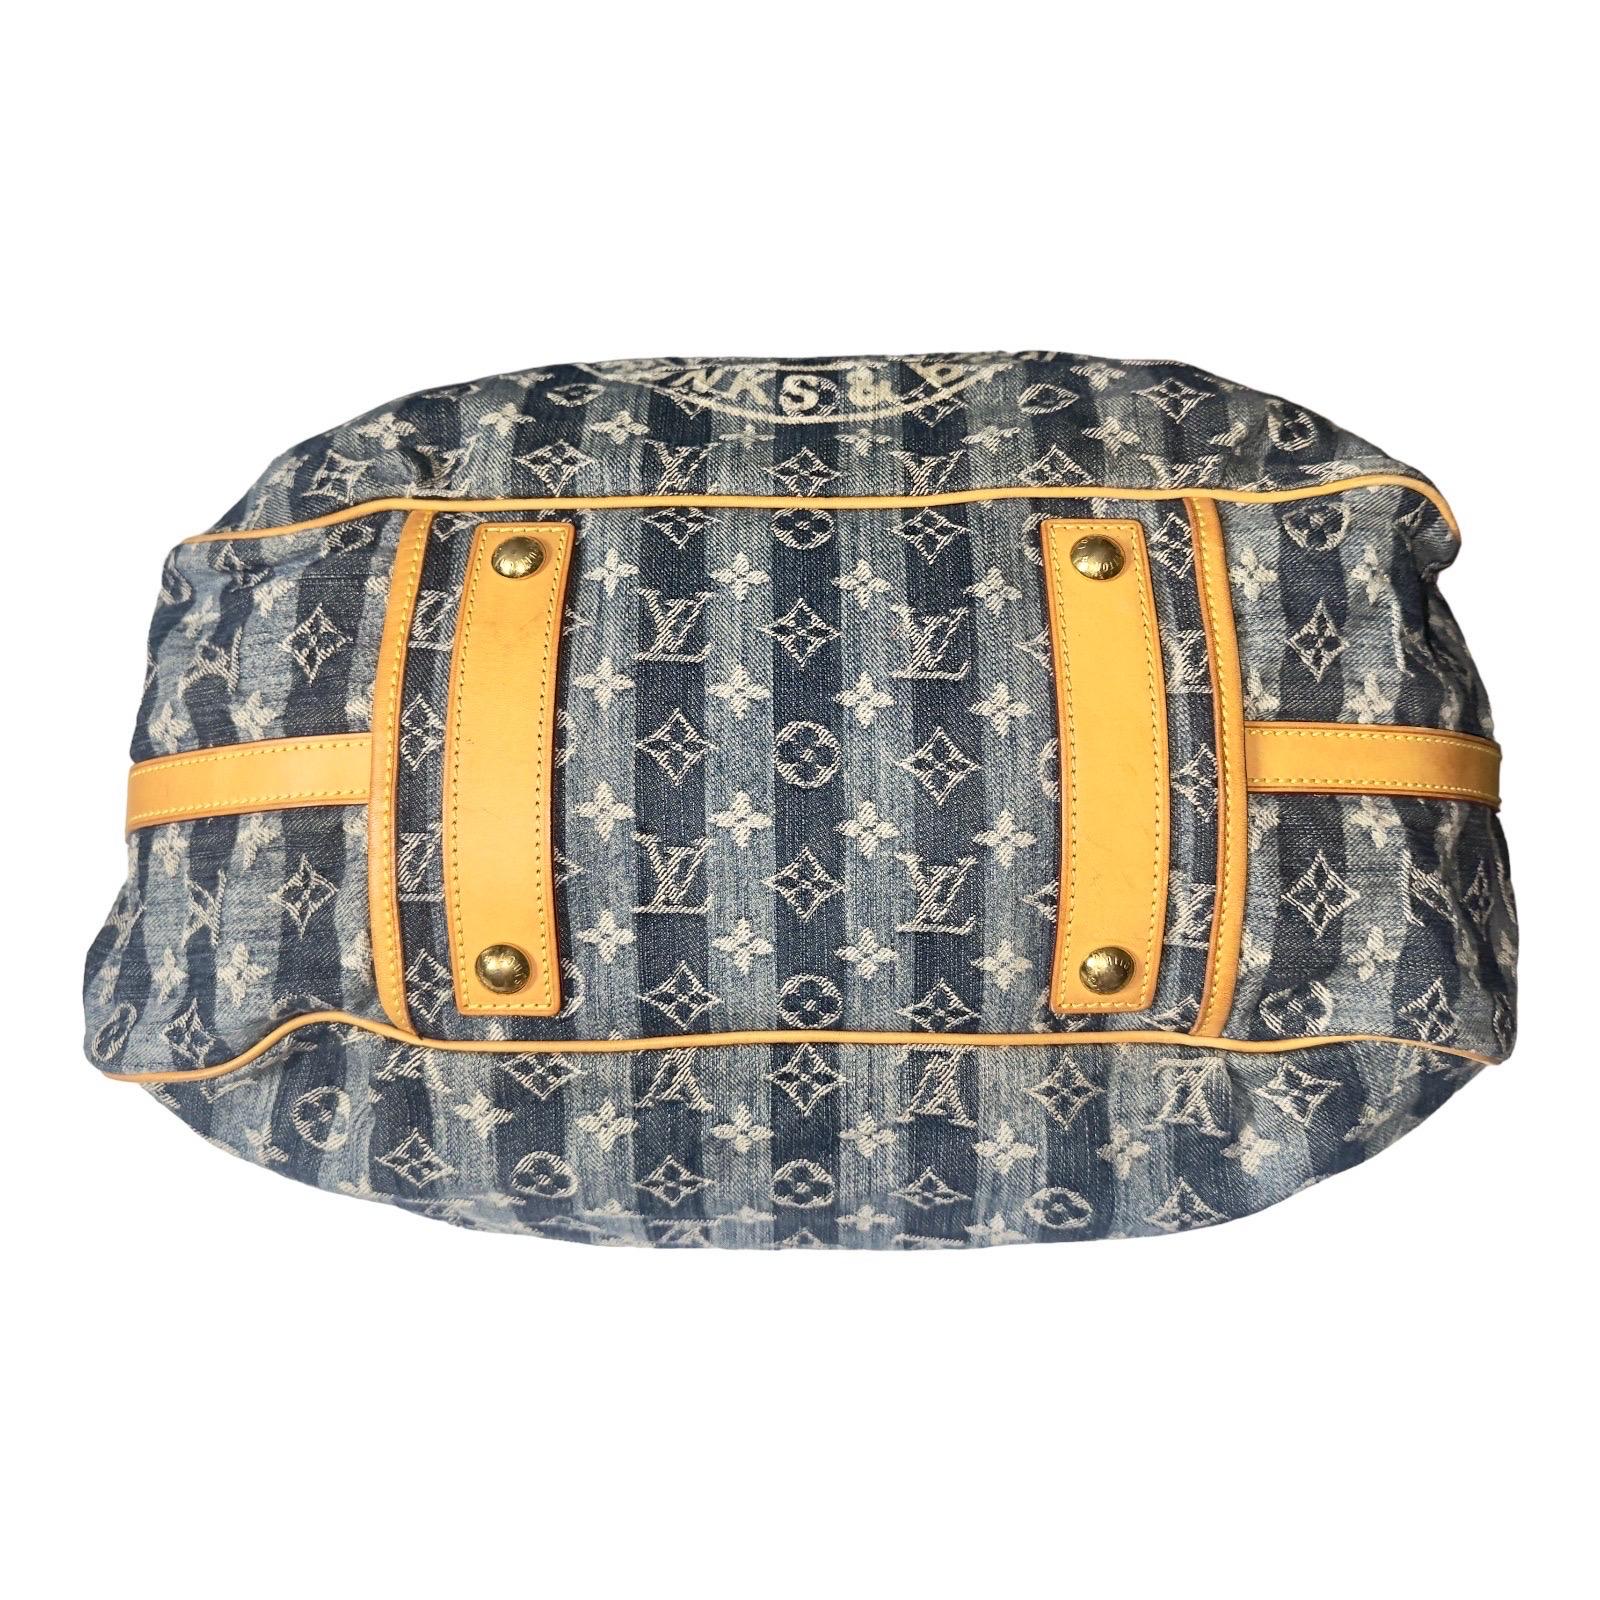 LOUIS VUITTON Monogram Denim Jeans & Bags Travel Bag Weekender Strap & Charm For Sale 1